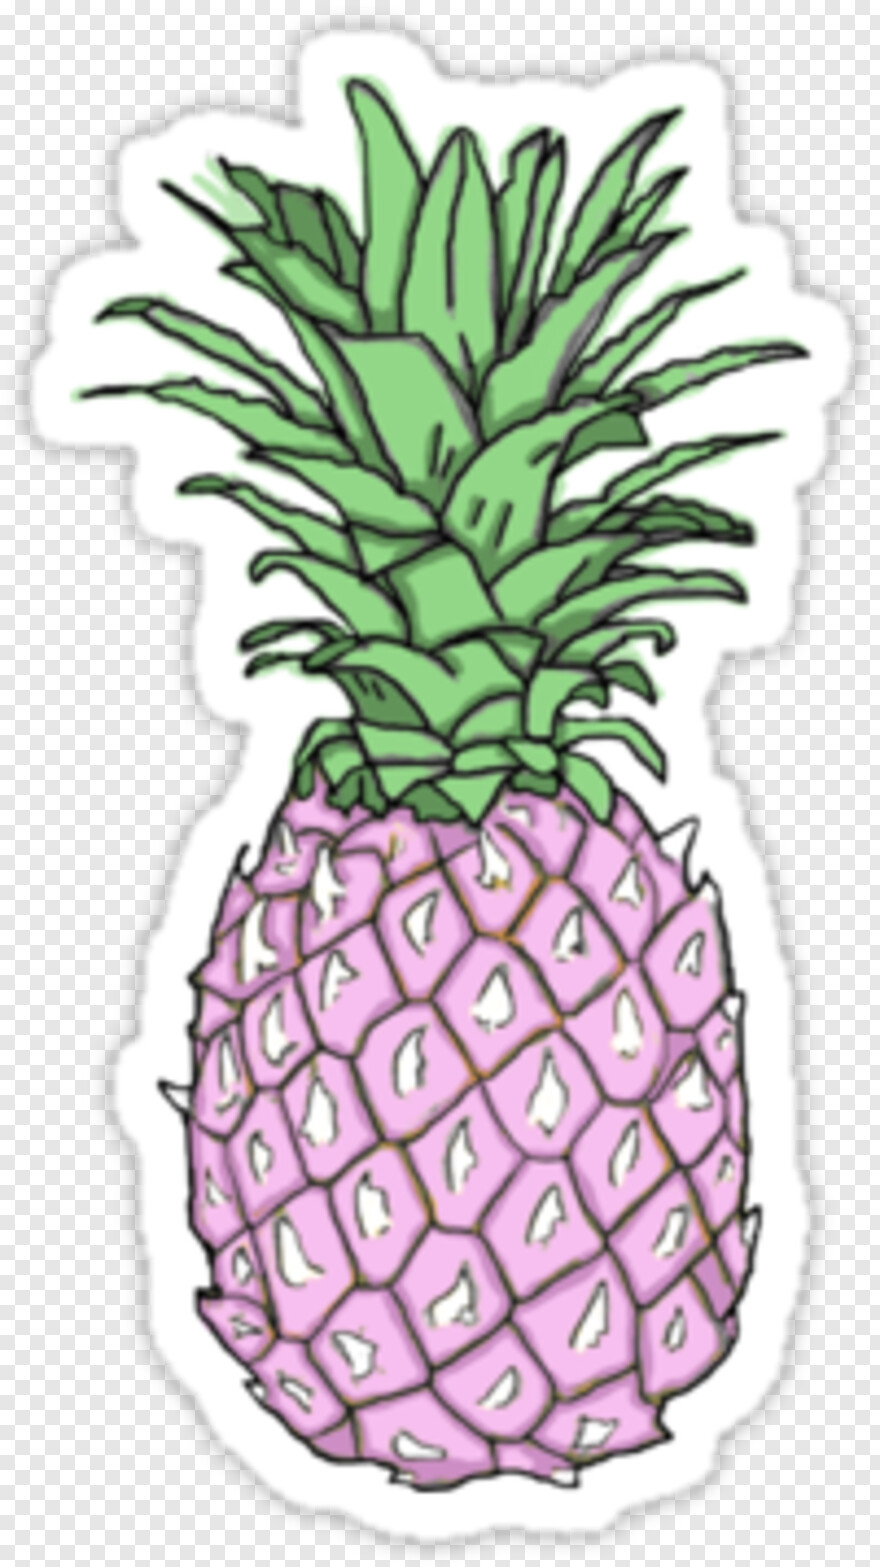 pineapple # 654207